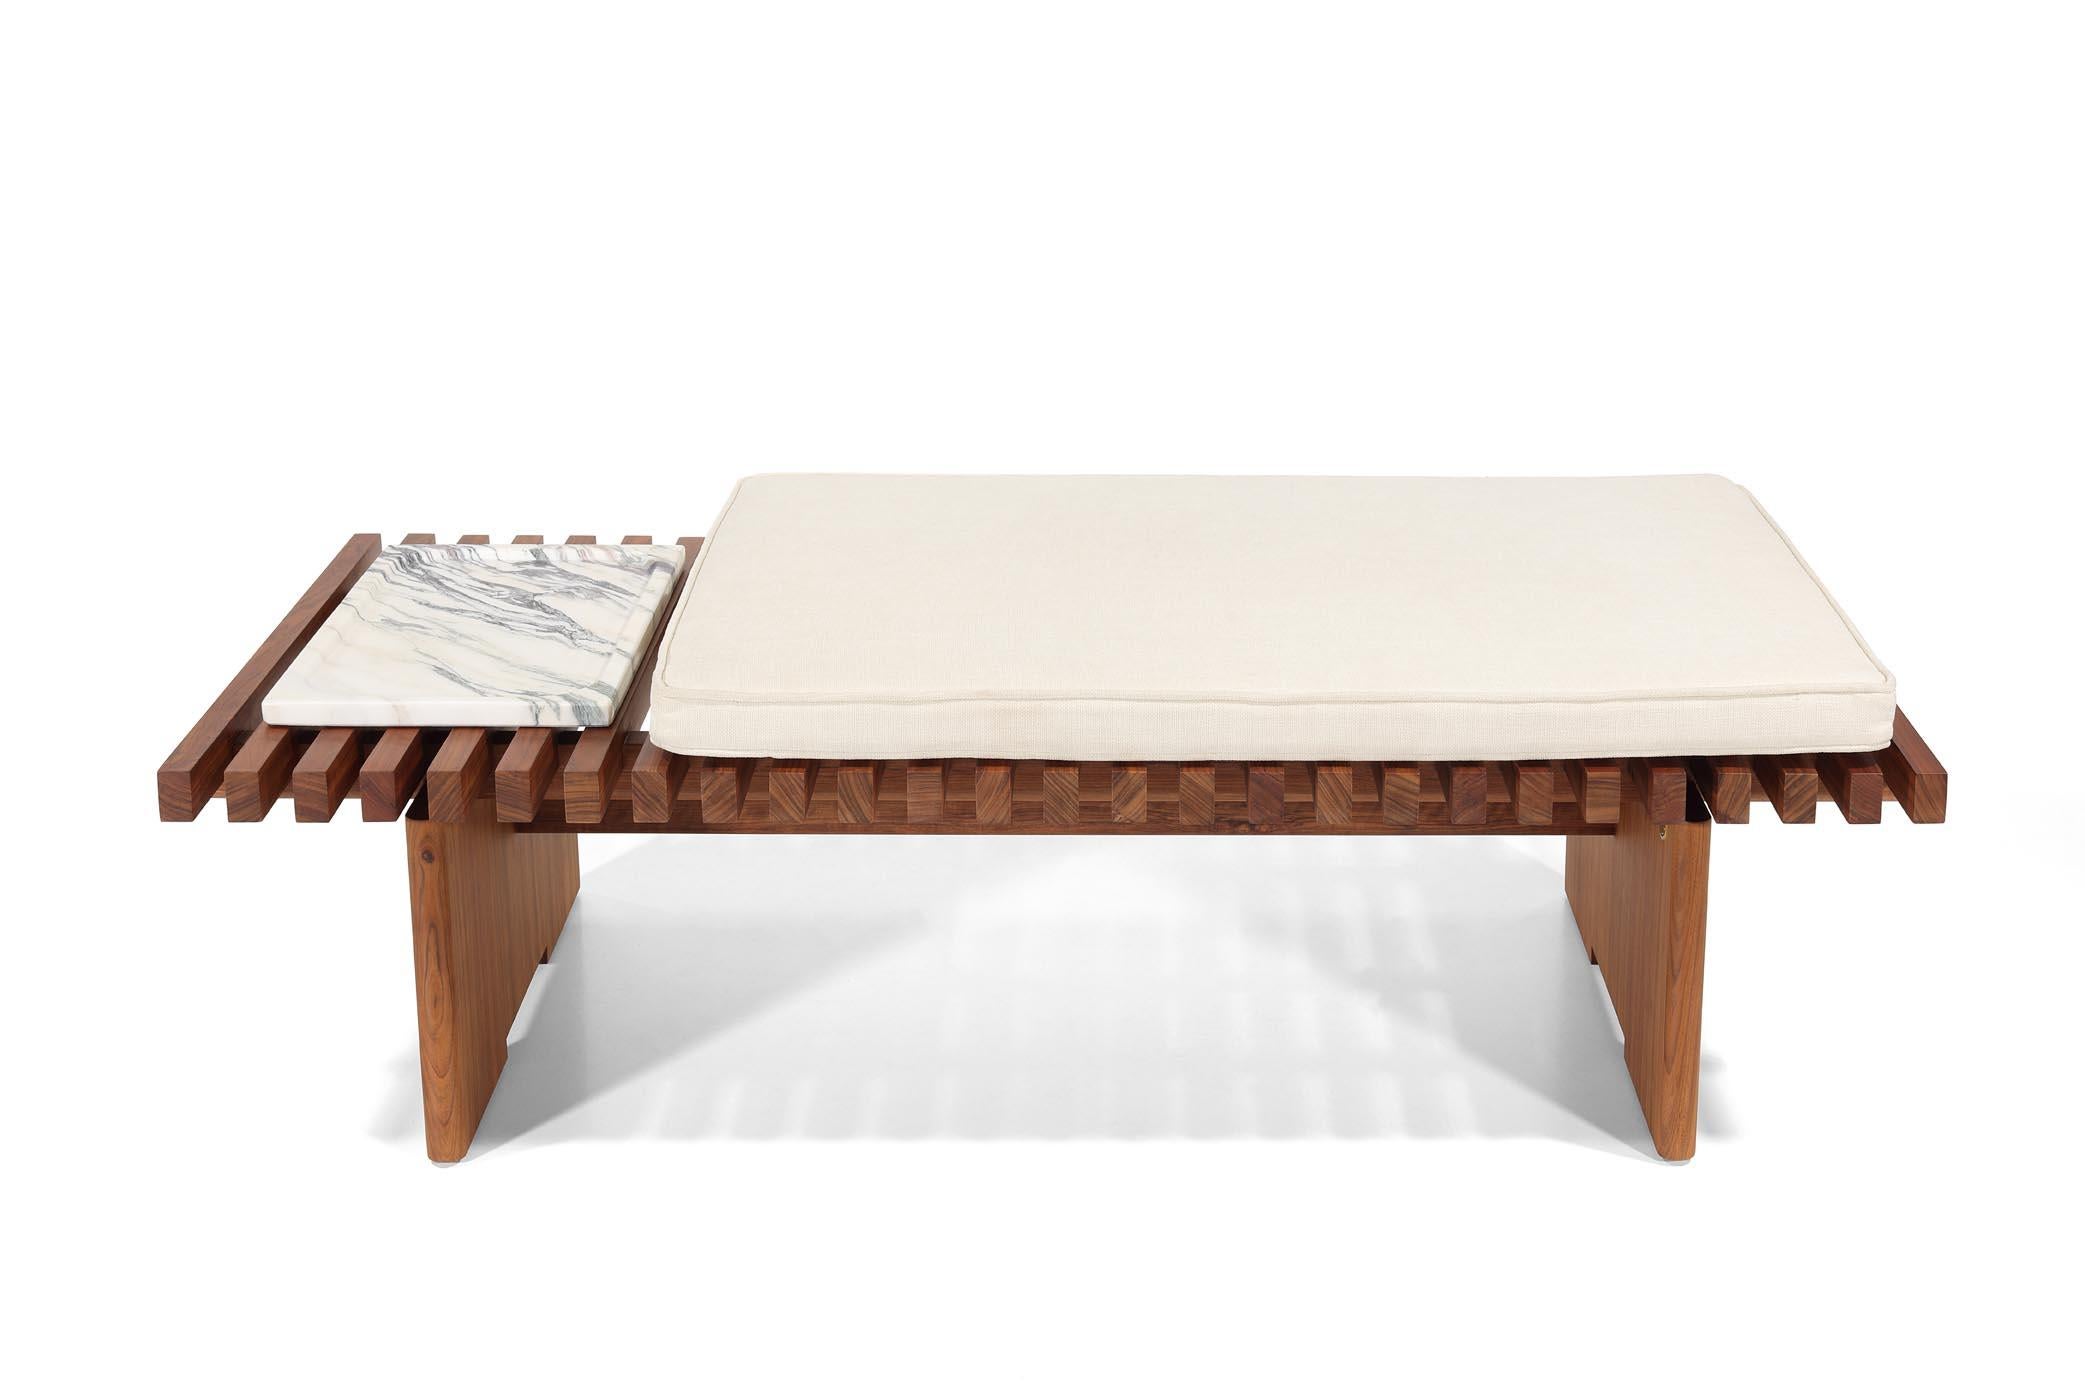 Portuguese Nokogiri Coffee Table Bench - 130cm + Cushion For Sale